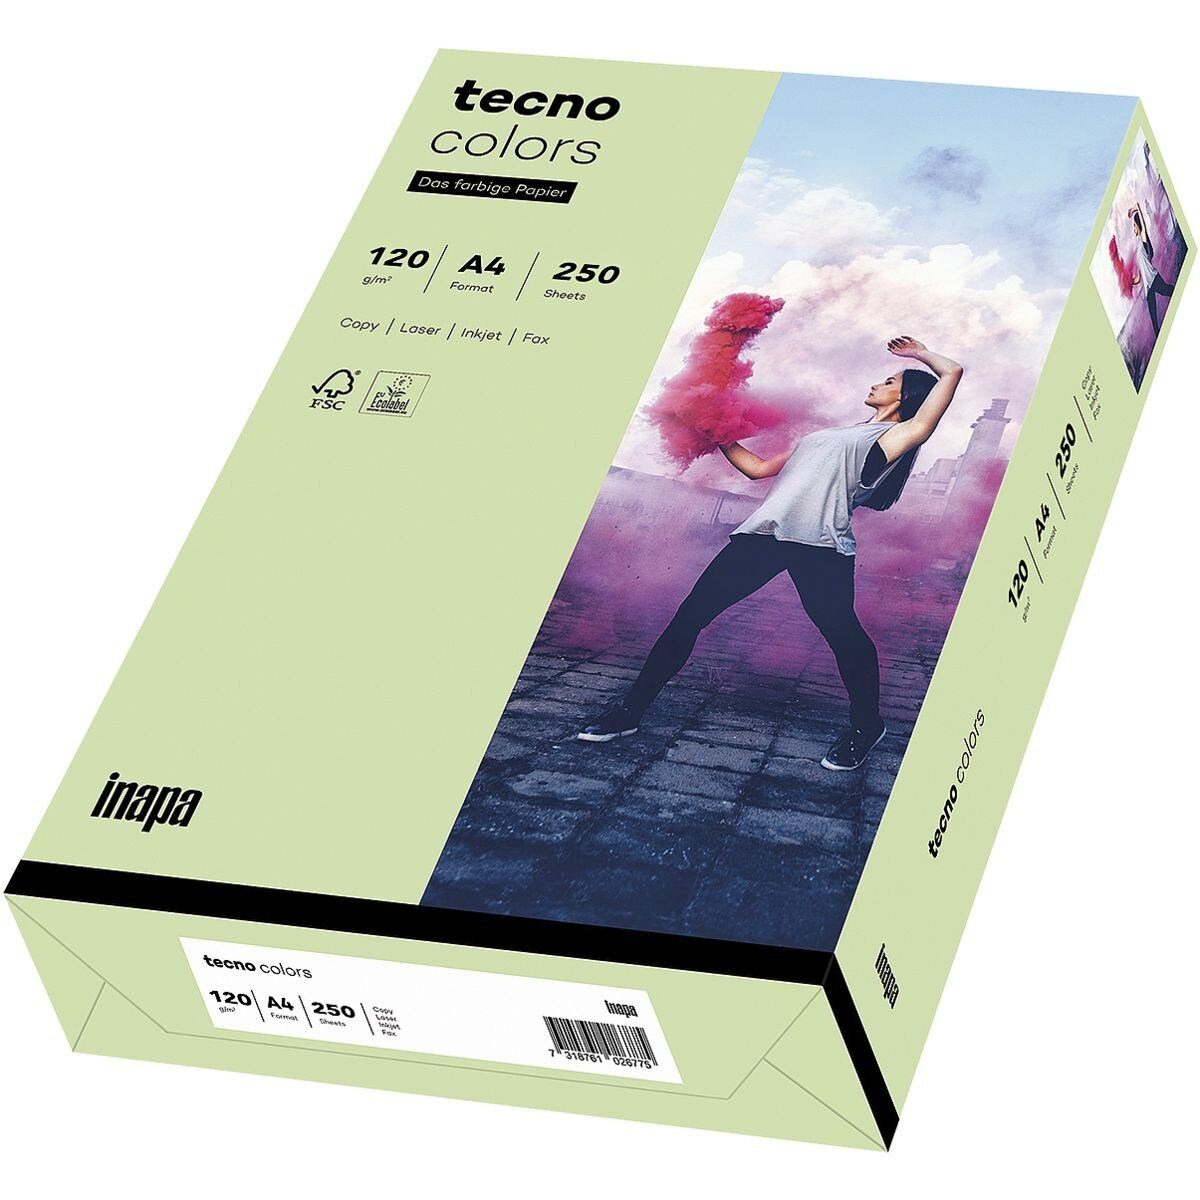 Inapa tecno Drucker- und Kopierpapier Rainbow / tecno Colors, Pastellfarben, Format DIN A4, 120 g/m², 250 Blatt mittelgrün